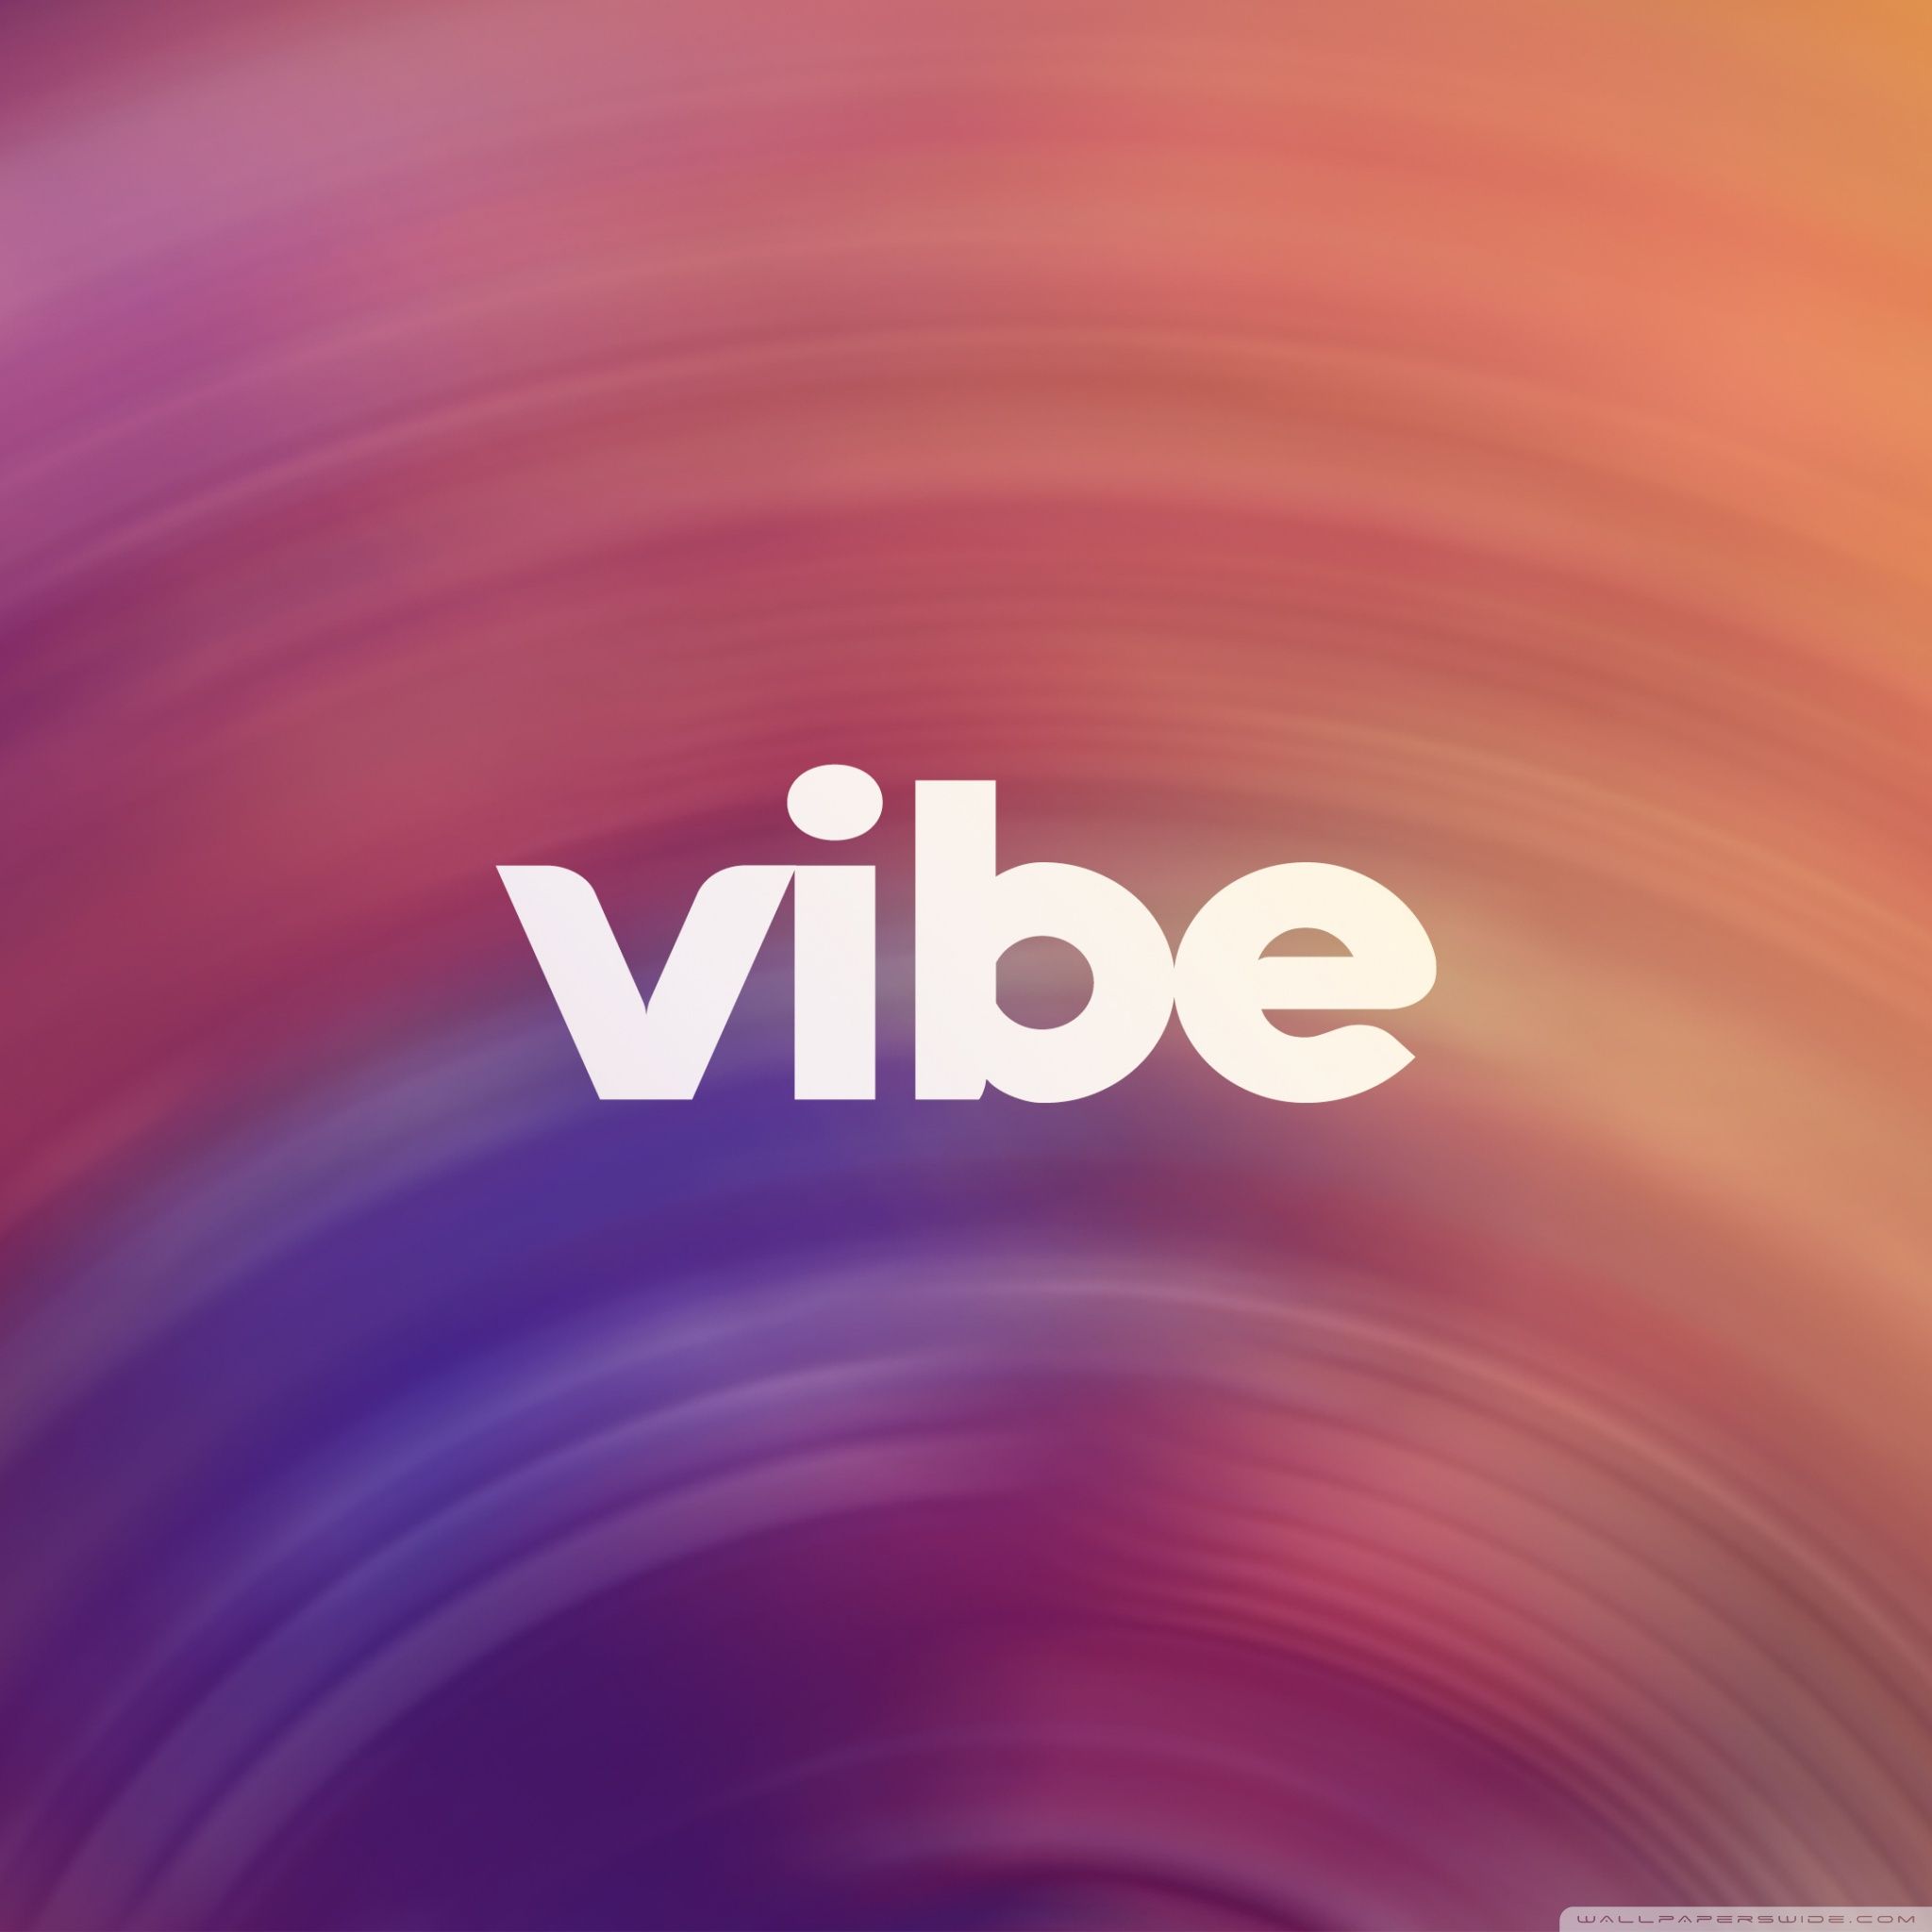 Vibe Ultra HD Desktop Background Wallpaper for 4K UHD TV, Tablet